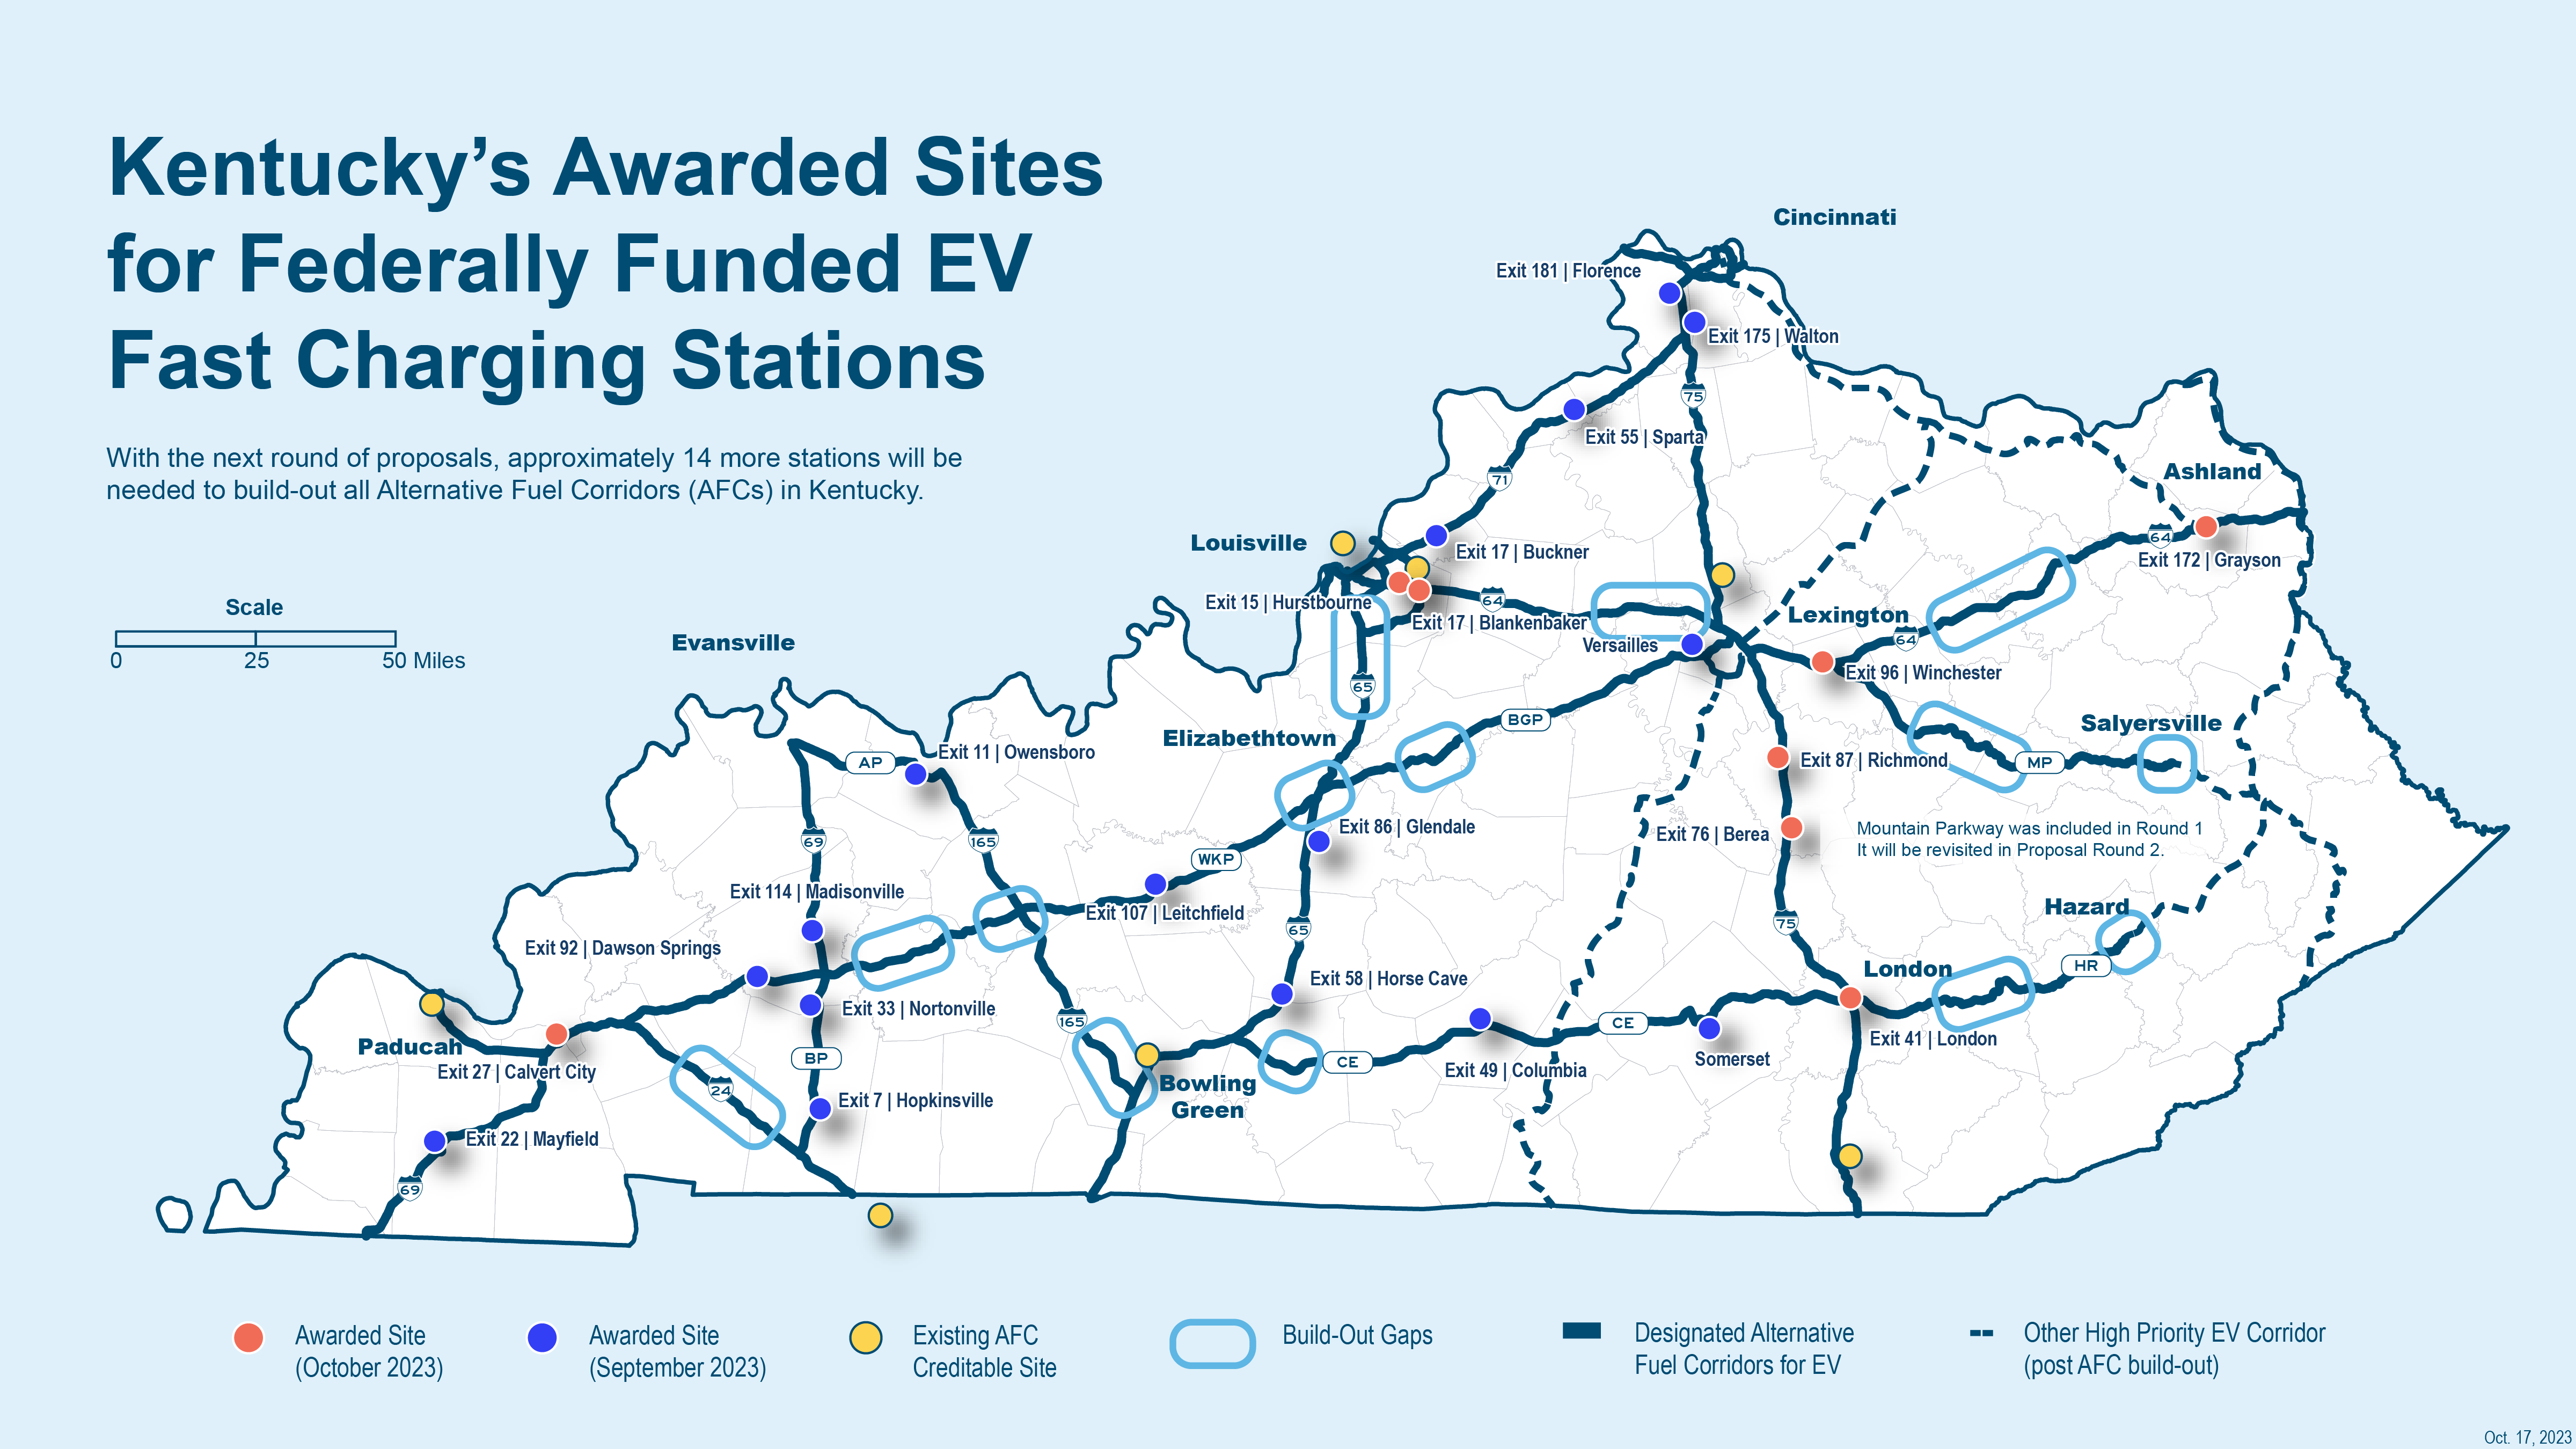 EV Fast Charging Station Map - Awarded Sites